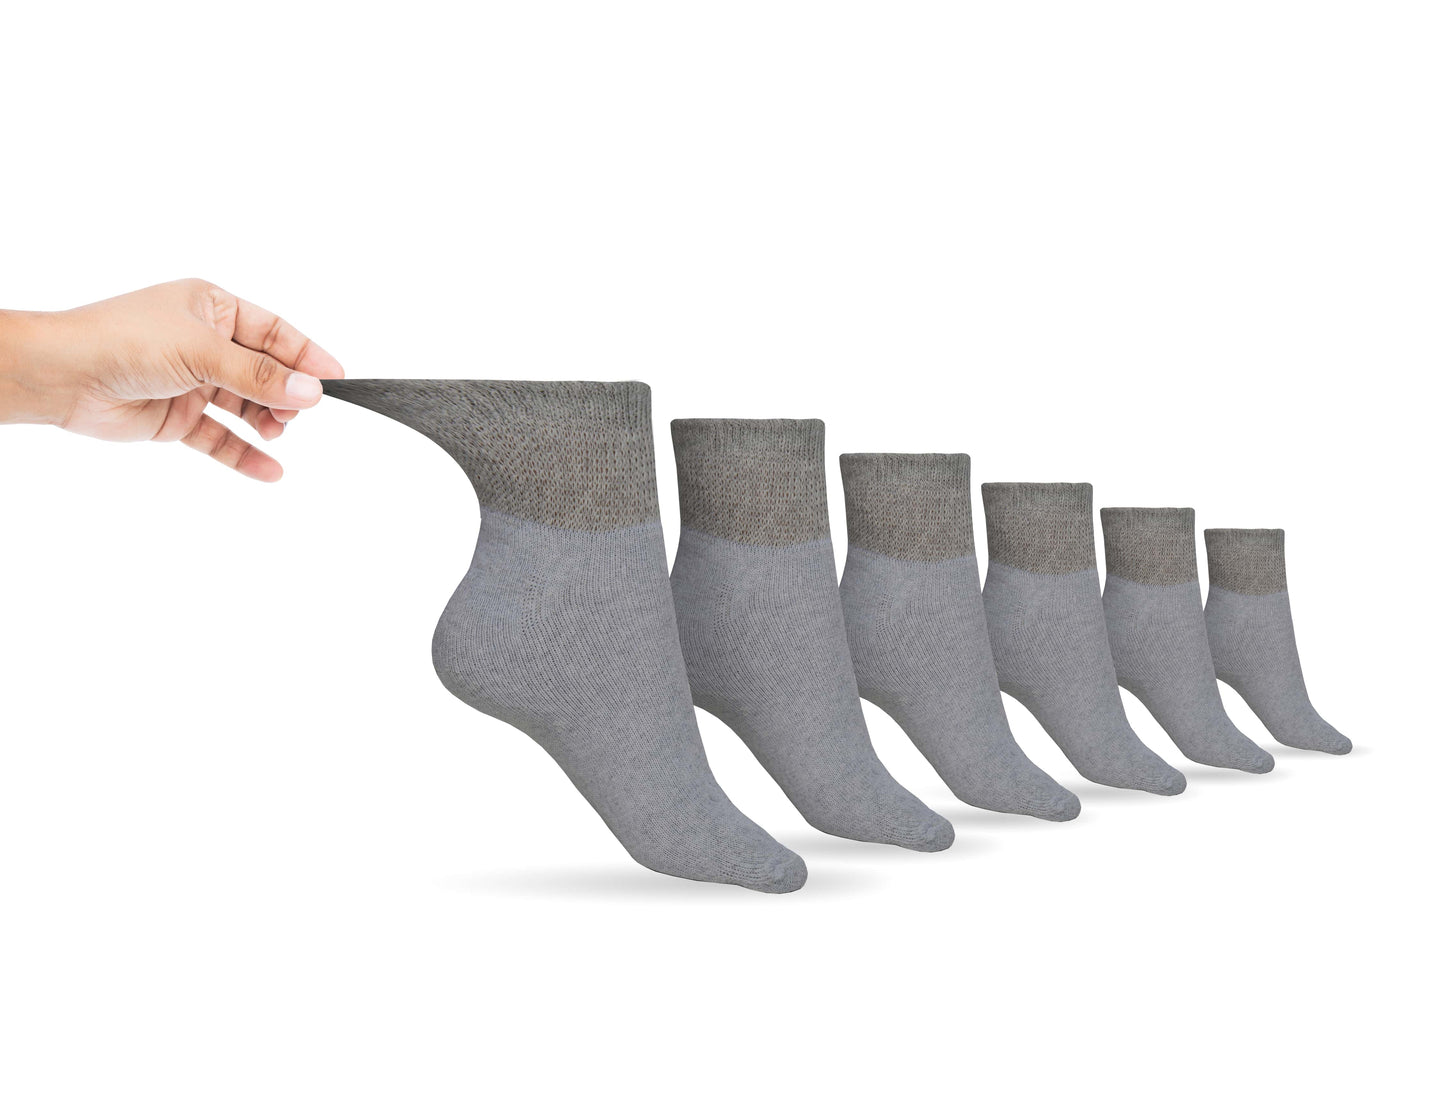 Men's Cotton Diabetic Ankle Socks (6 Pair)